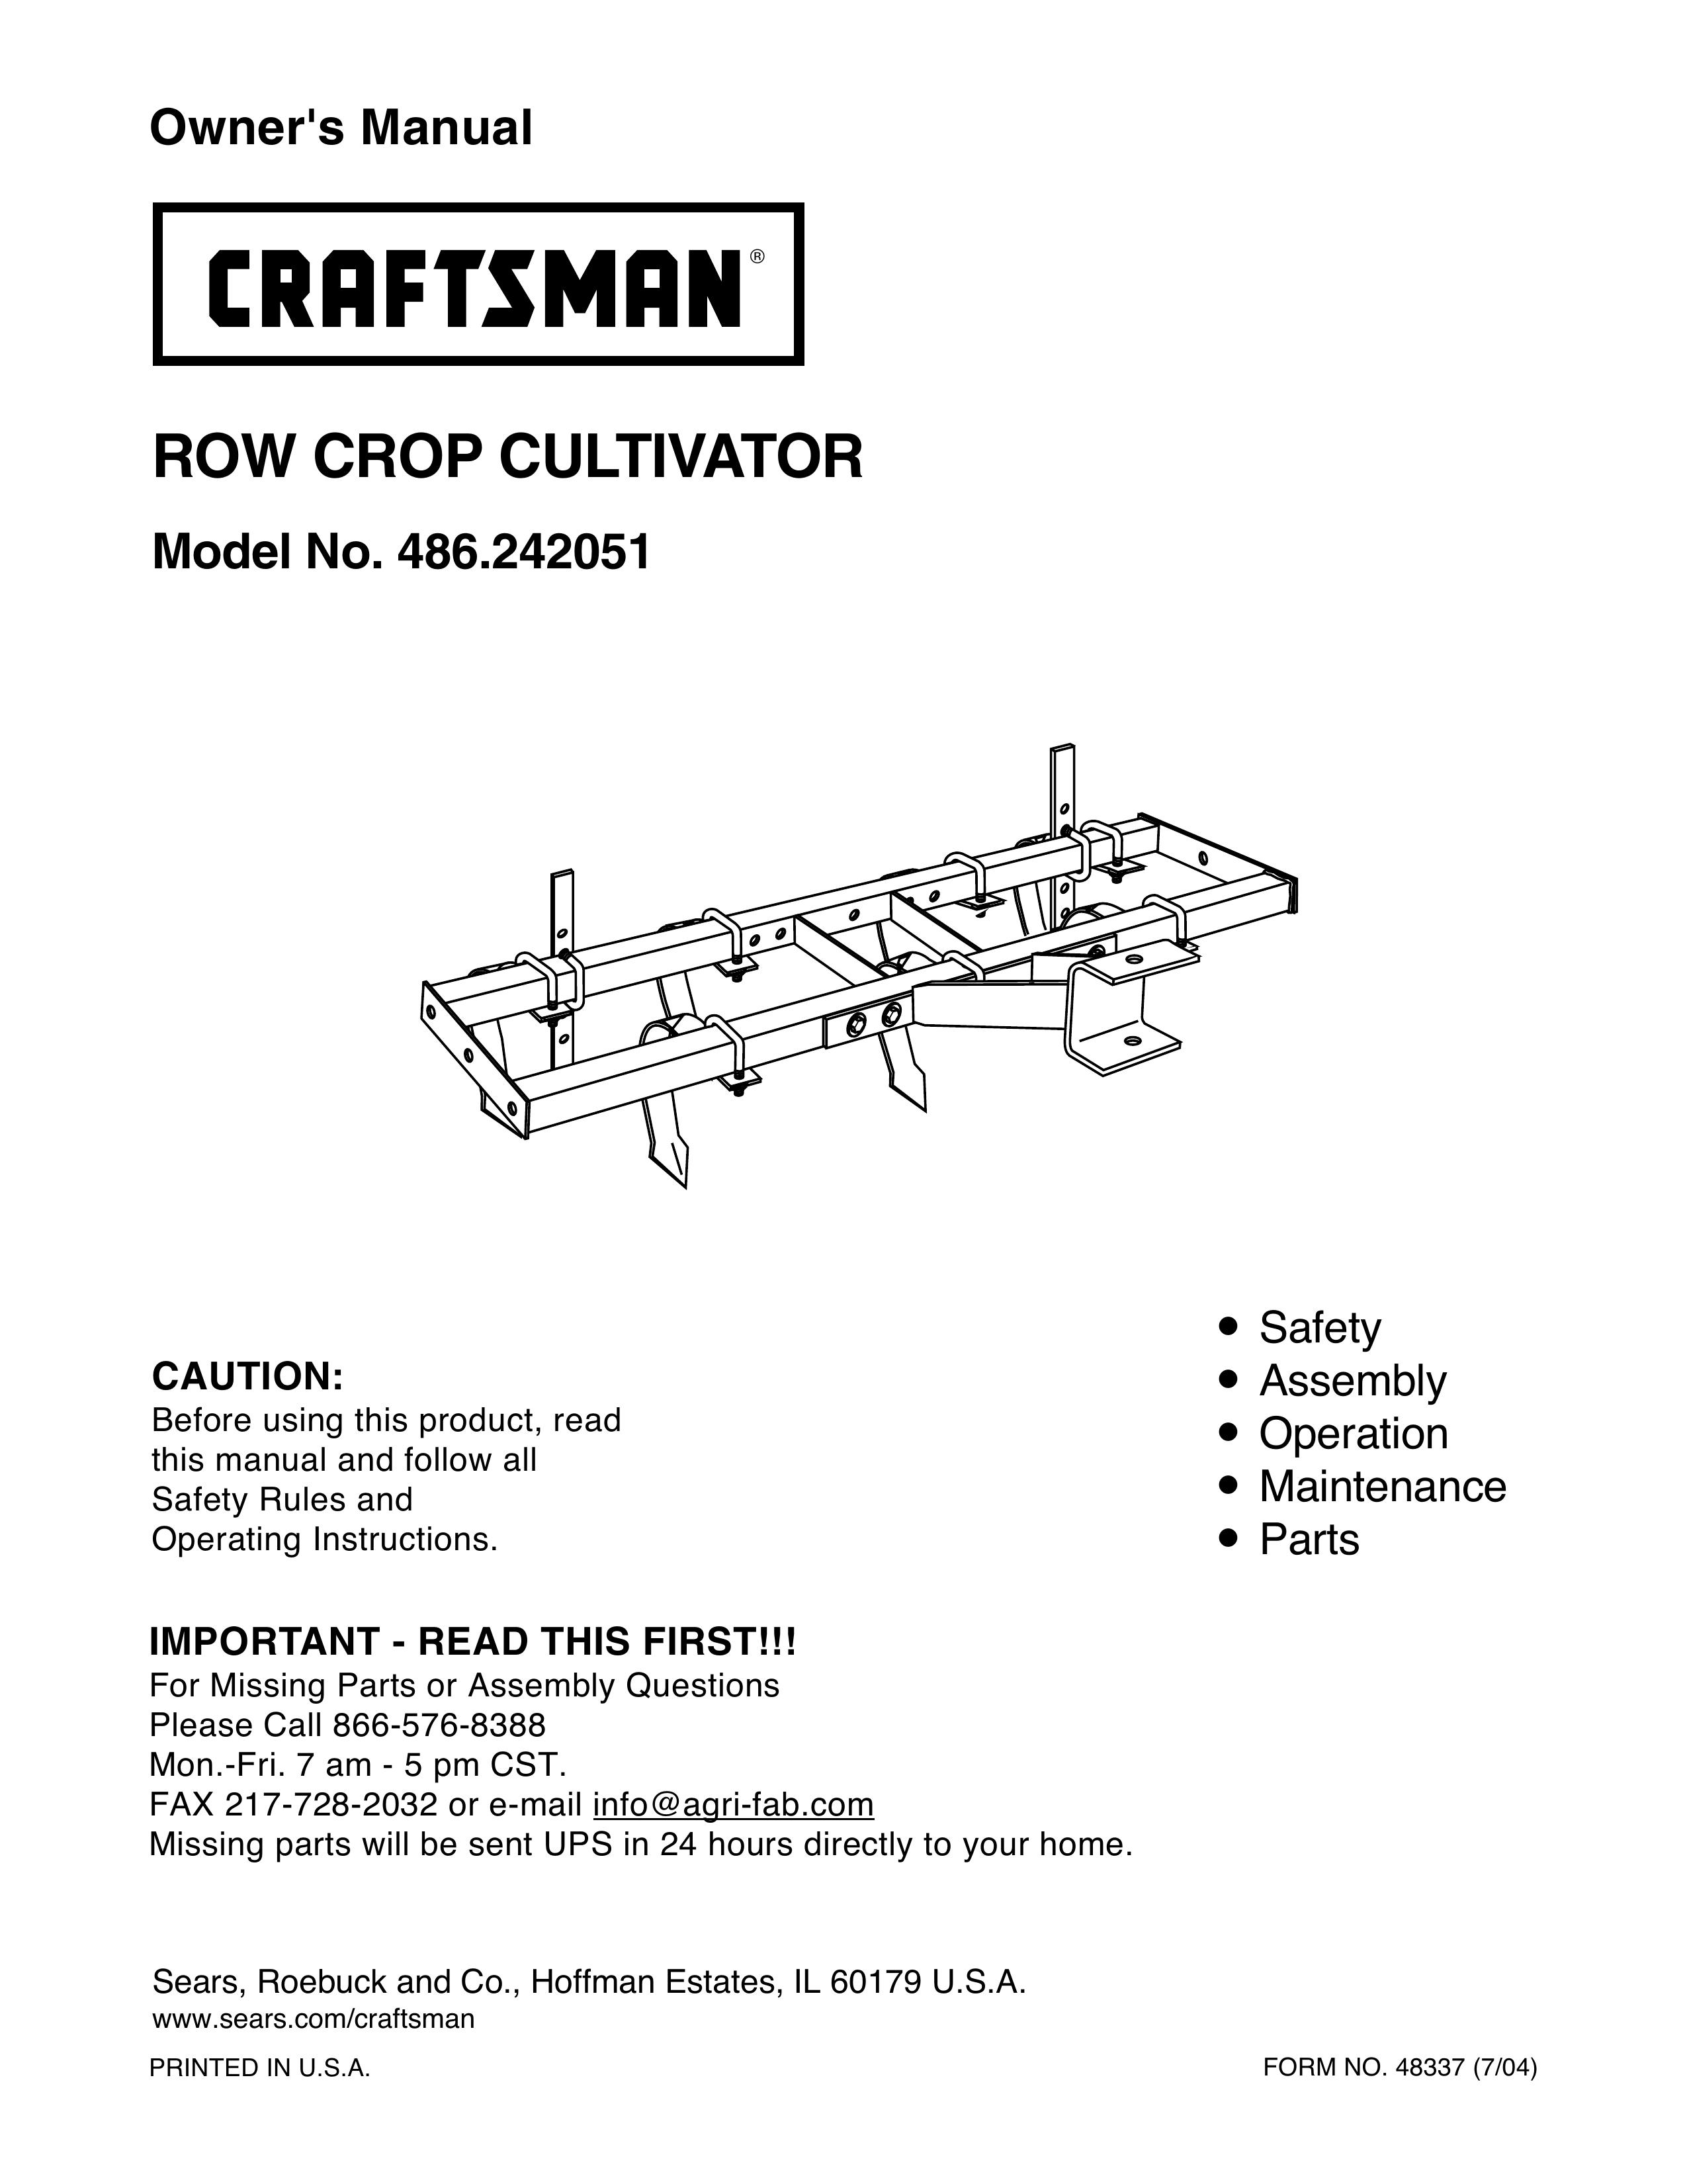 Craftsman 486.242051 Cultivator User Manual